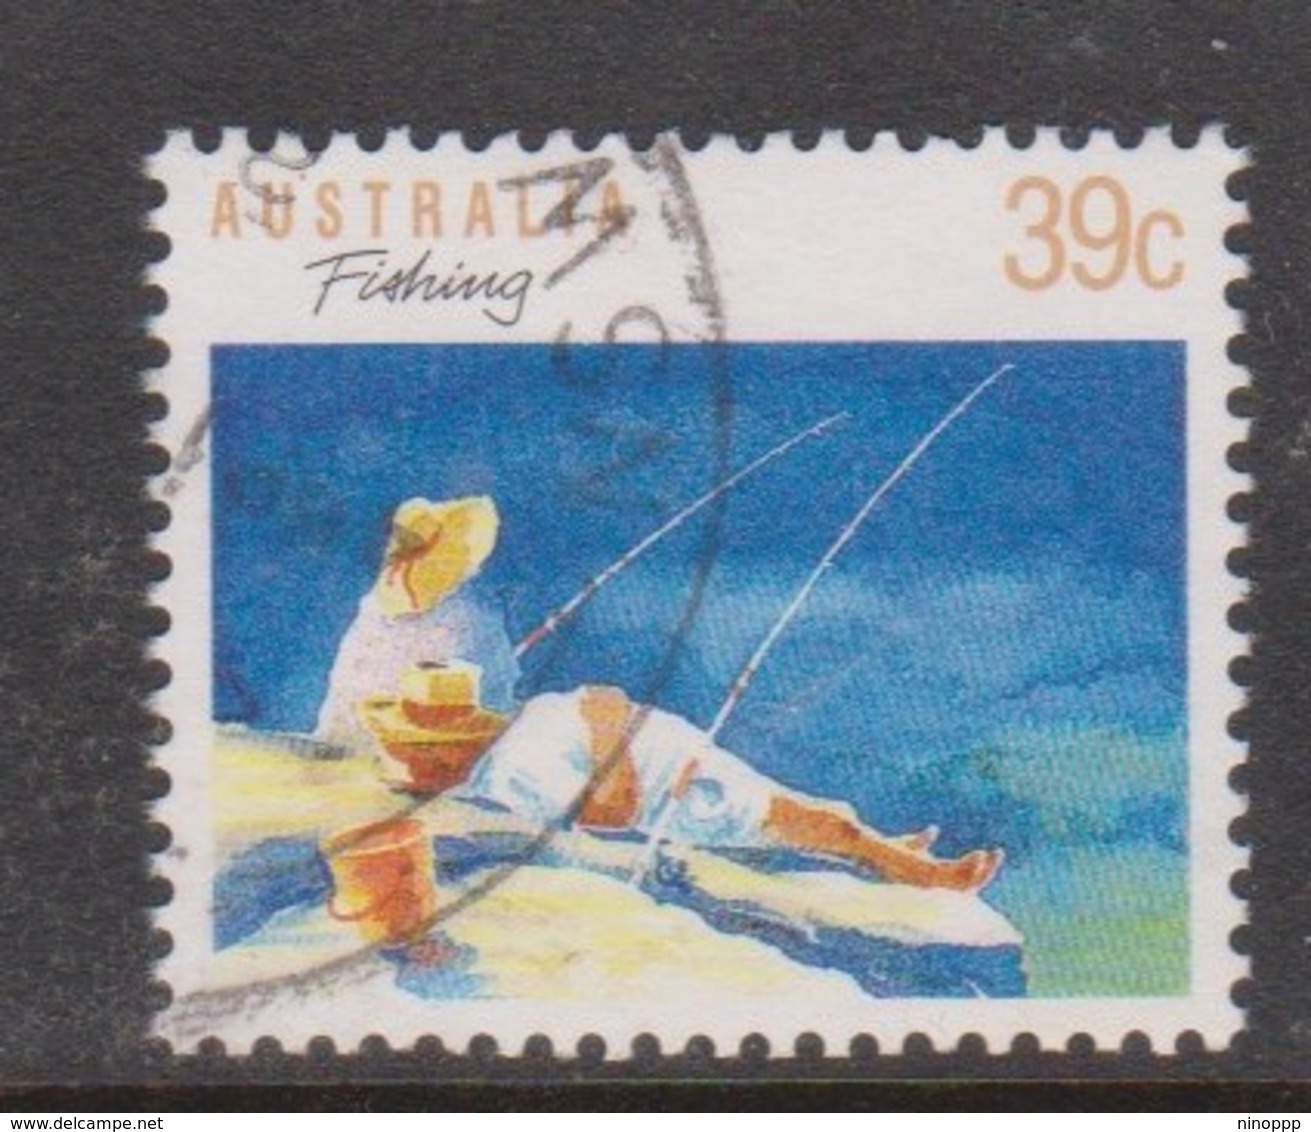 Australia ASC 1185 1989 Sports 39c Fishing Perf 13 X 13.5, Used - Prove & Ristampe